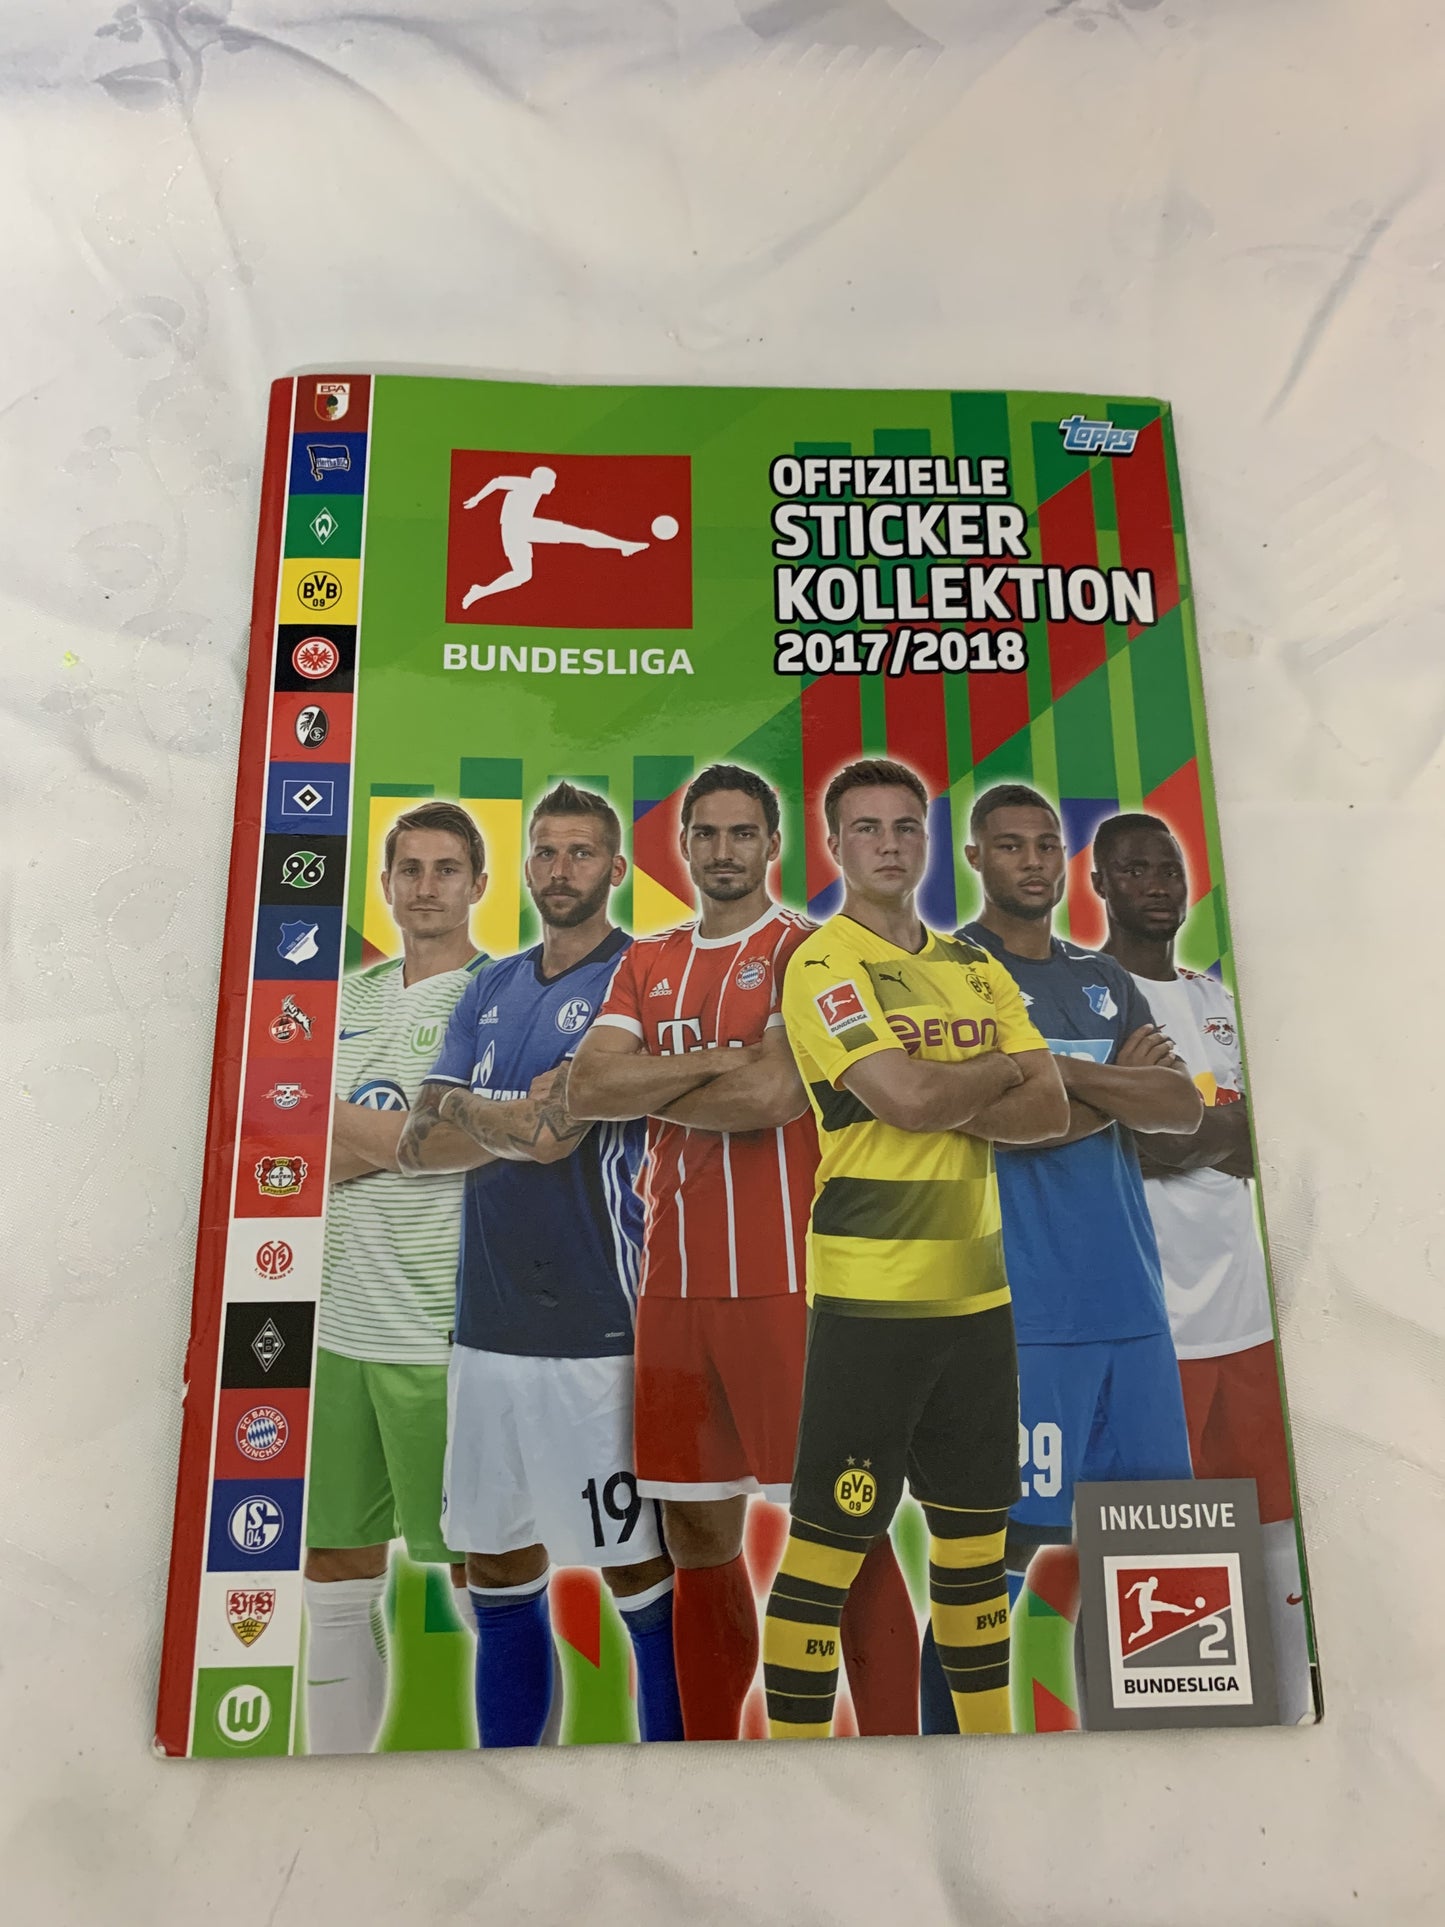 Offizielle Sticker Kollektion 2017/2018 Bundesliga